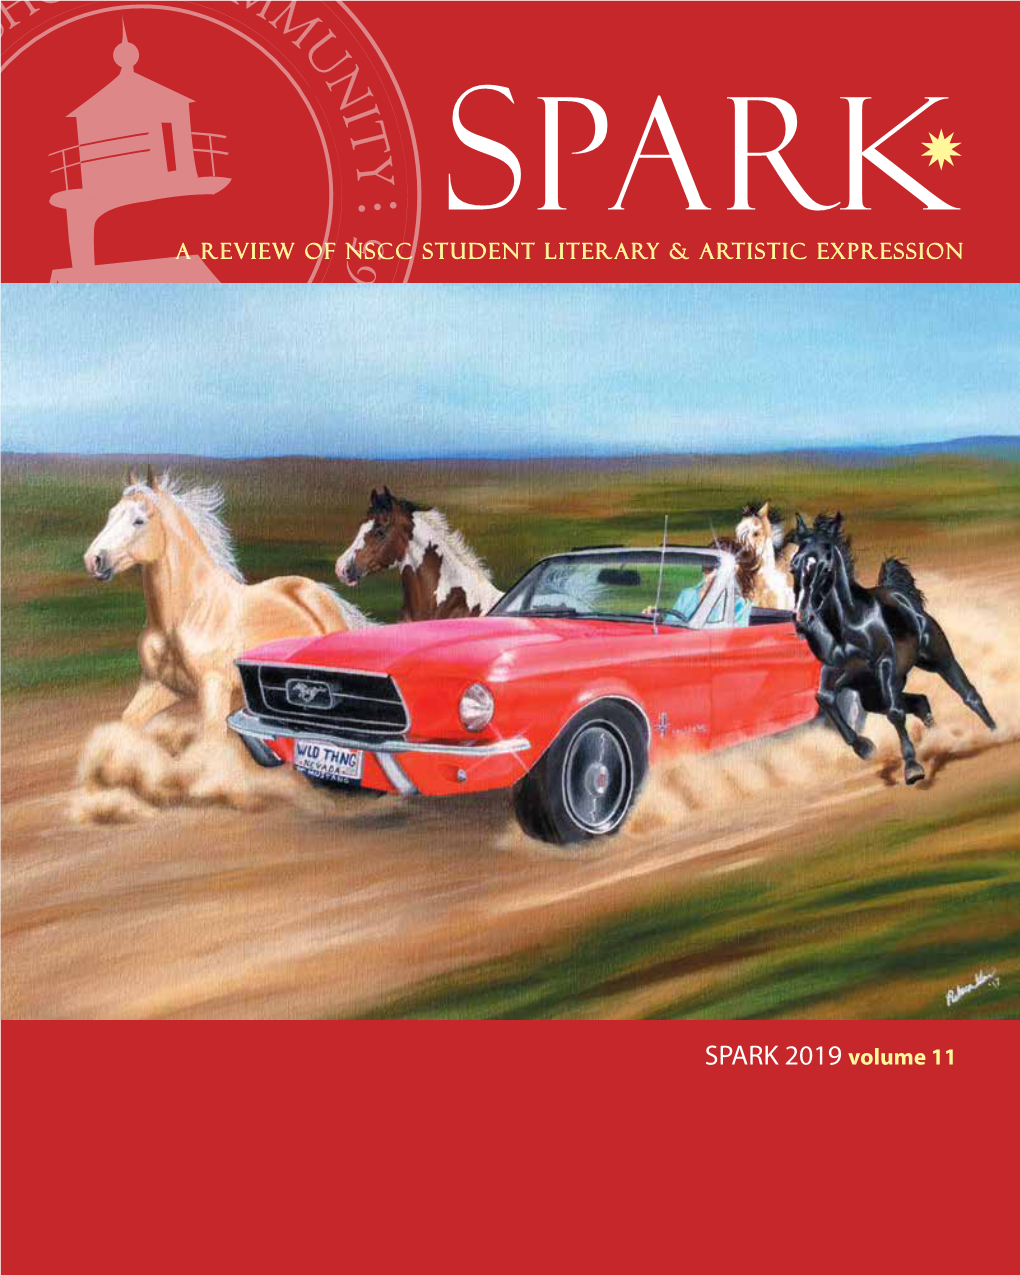 SPARK 2019 Volume 11 Sparked by Inspiration